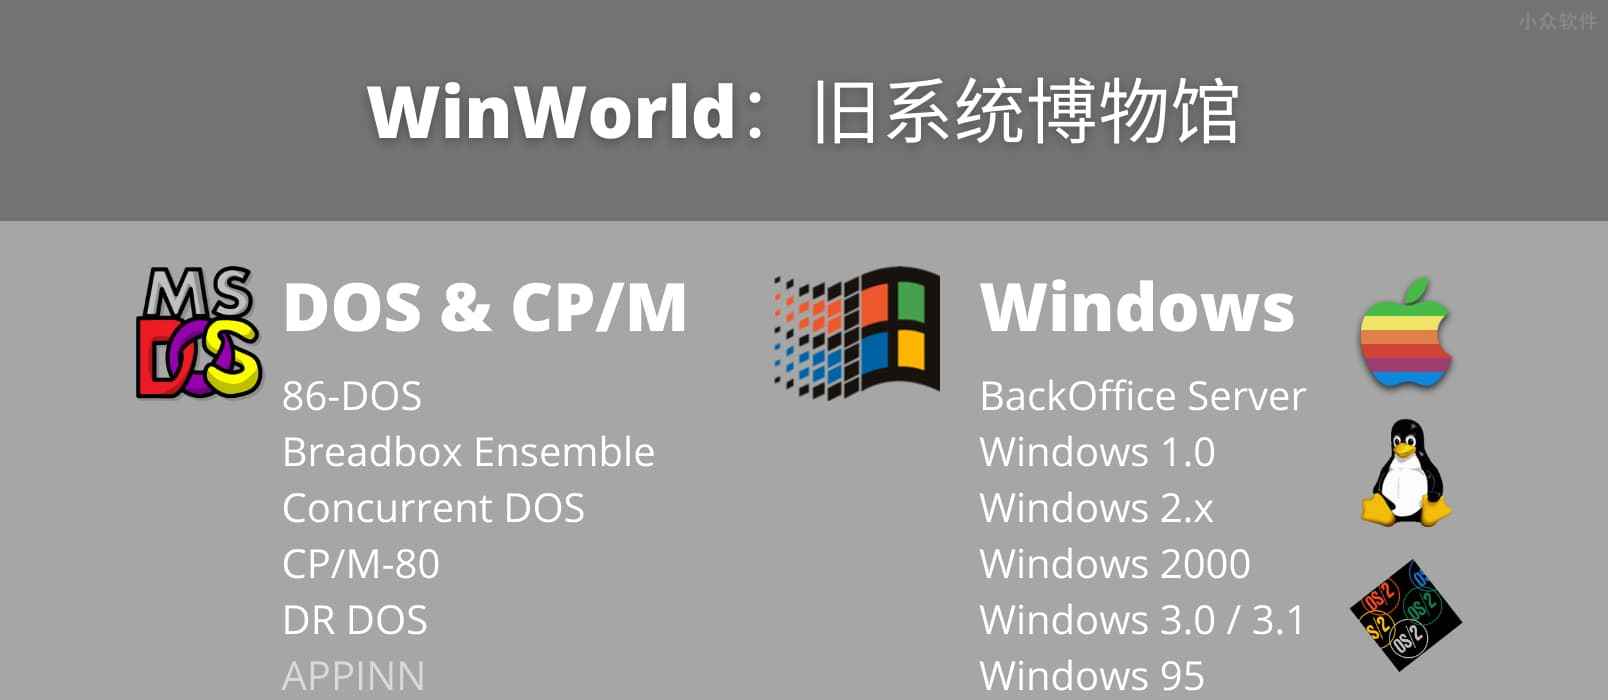 WinWorld - 从 DOS 到 Win 2000，旧系统博物馆，还有同样过时的海量软件、游戏